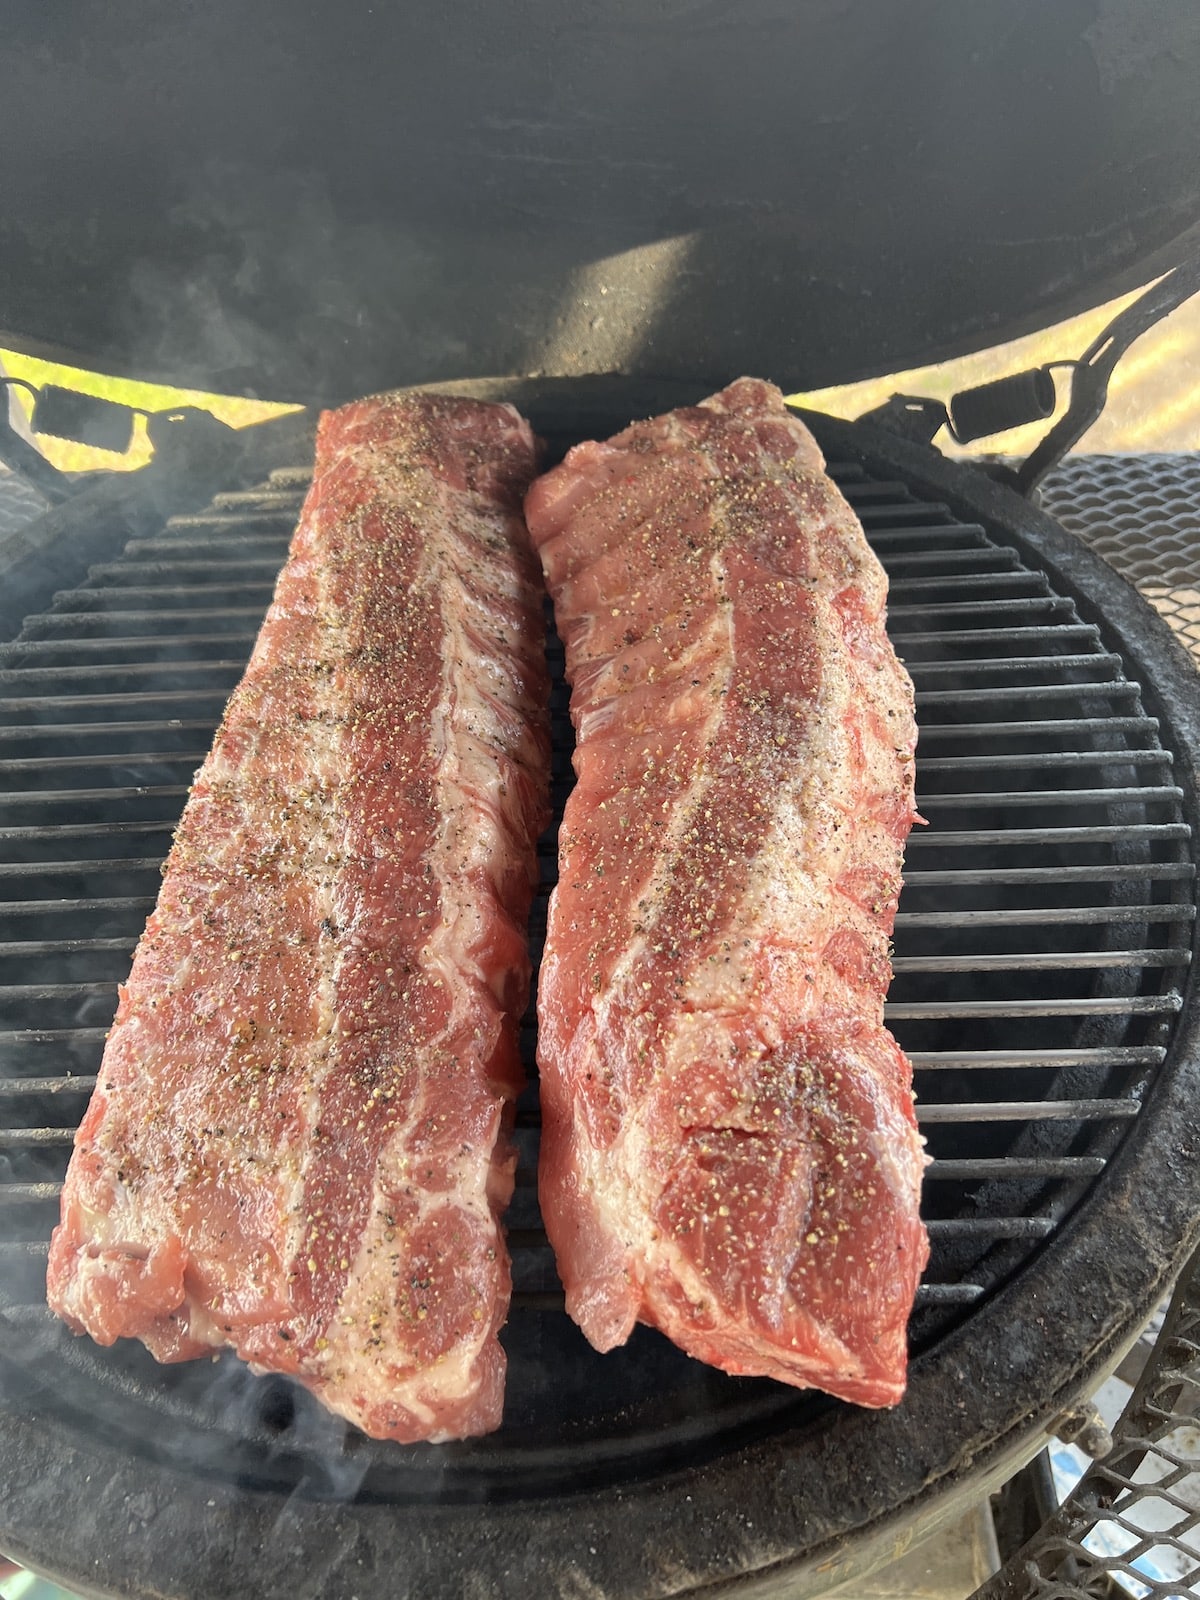 2 racks ribs on a grill.